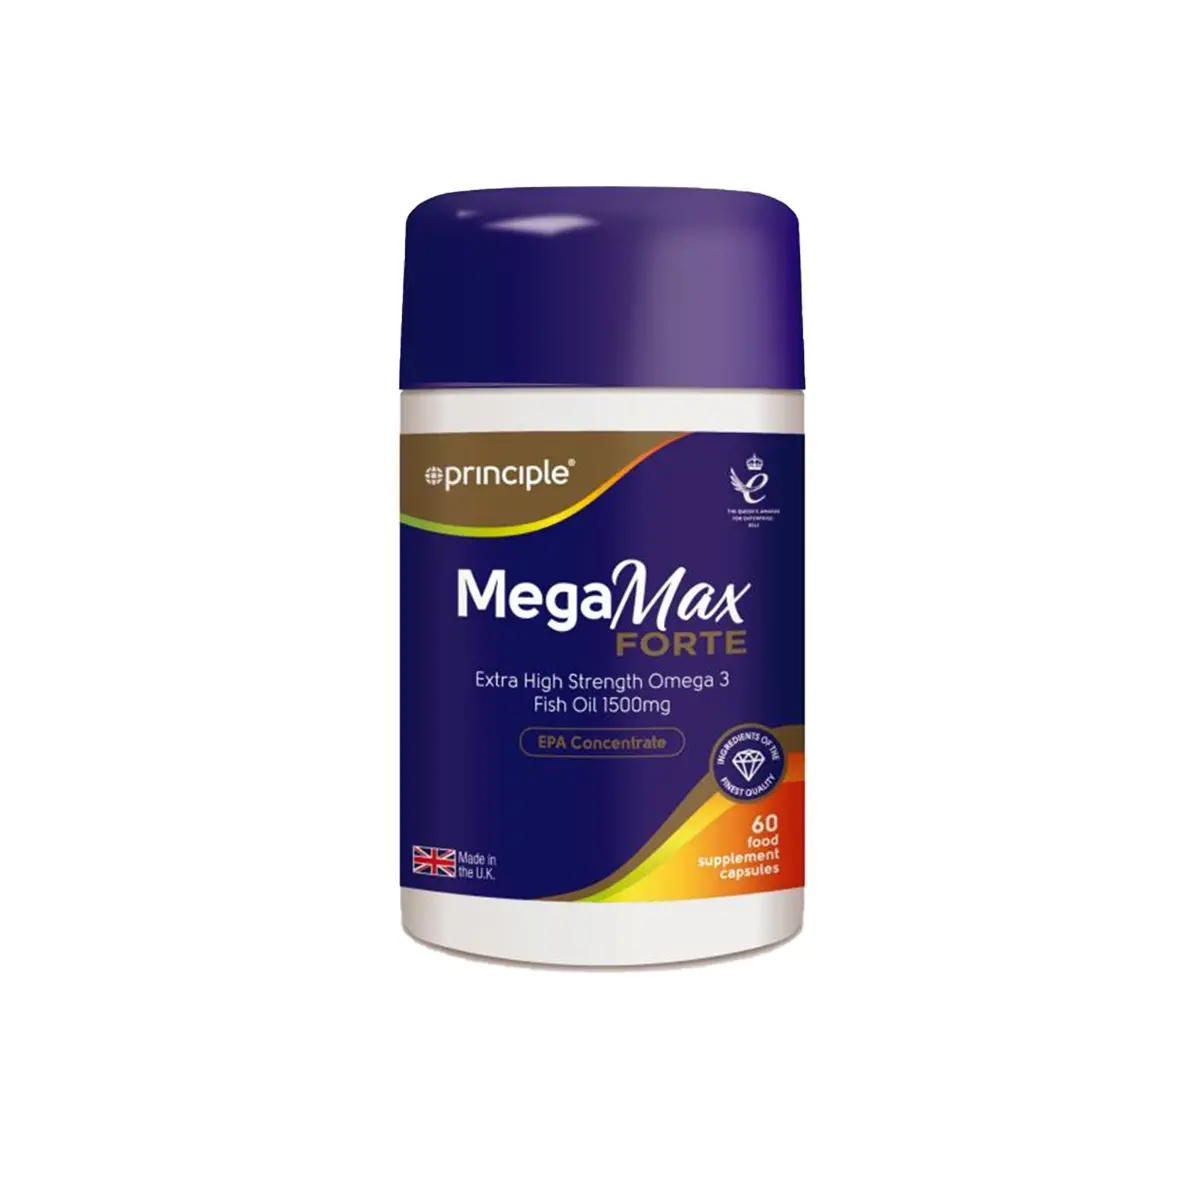 Principle Megamax Forte Fish Oil 1500mg Capsules 60s